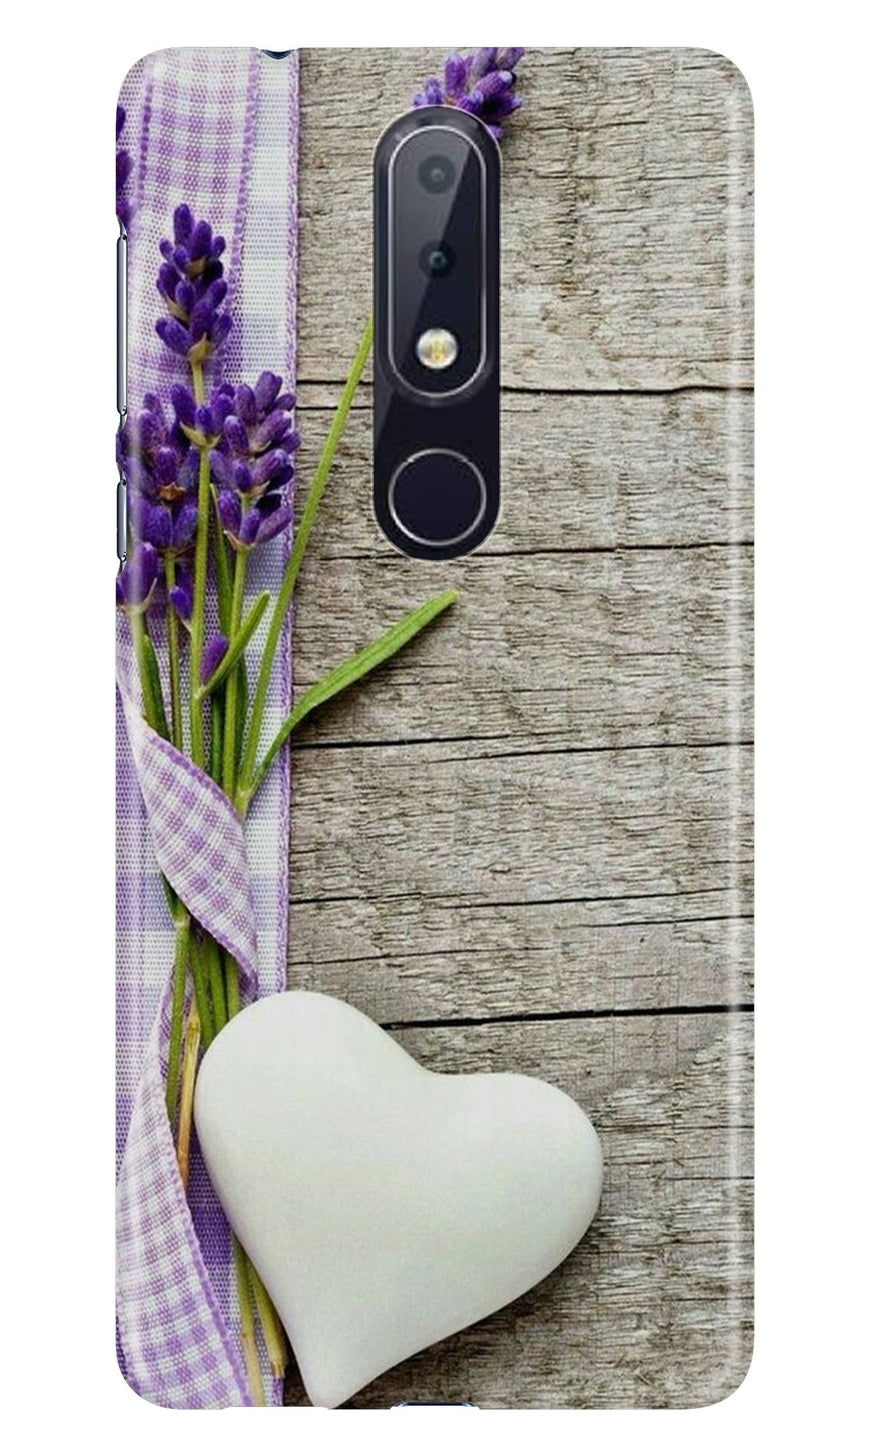 White Heart Case for Nokia 6.1 Plus (Design No. 298)